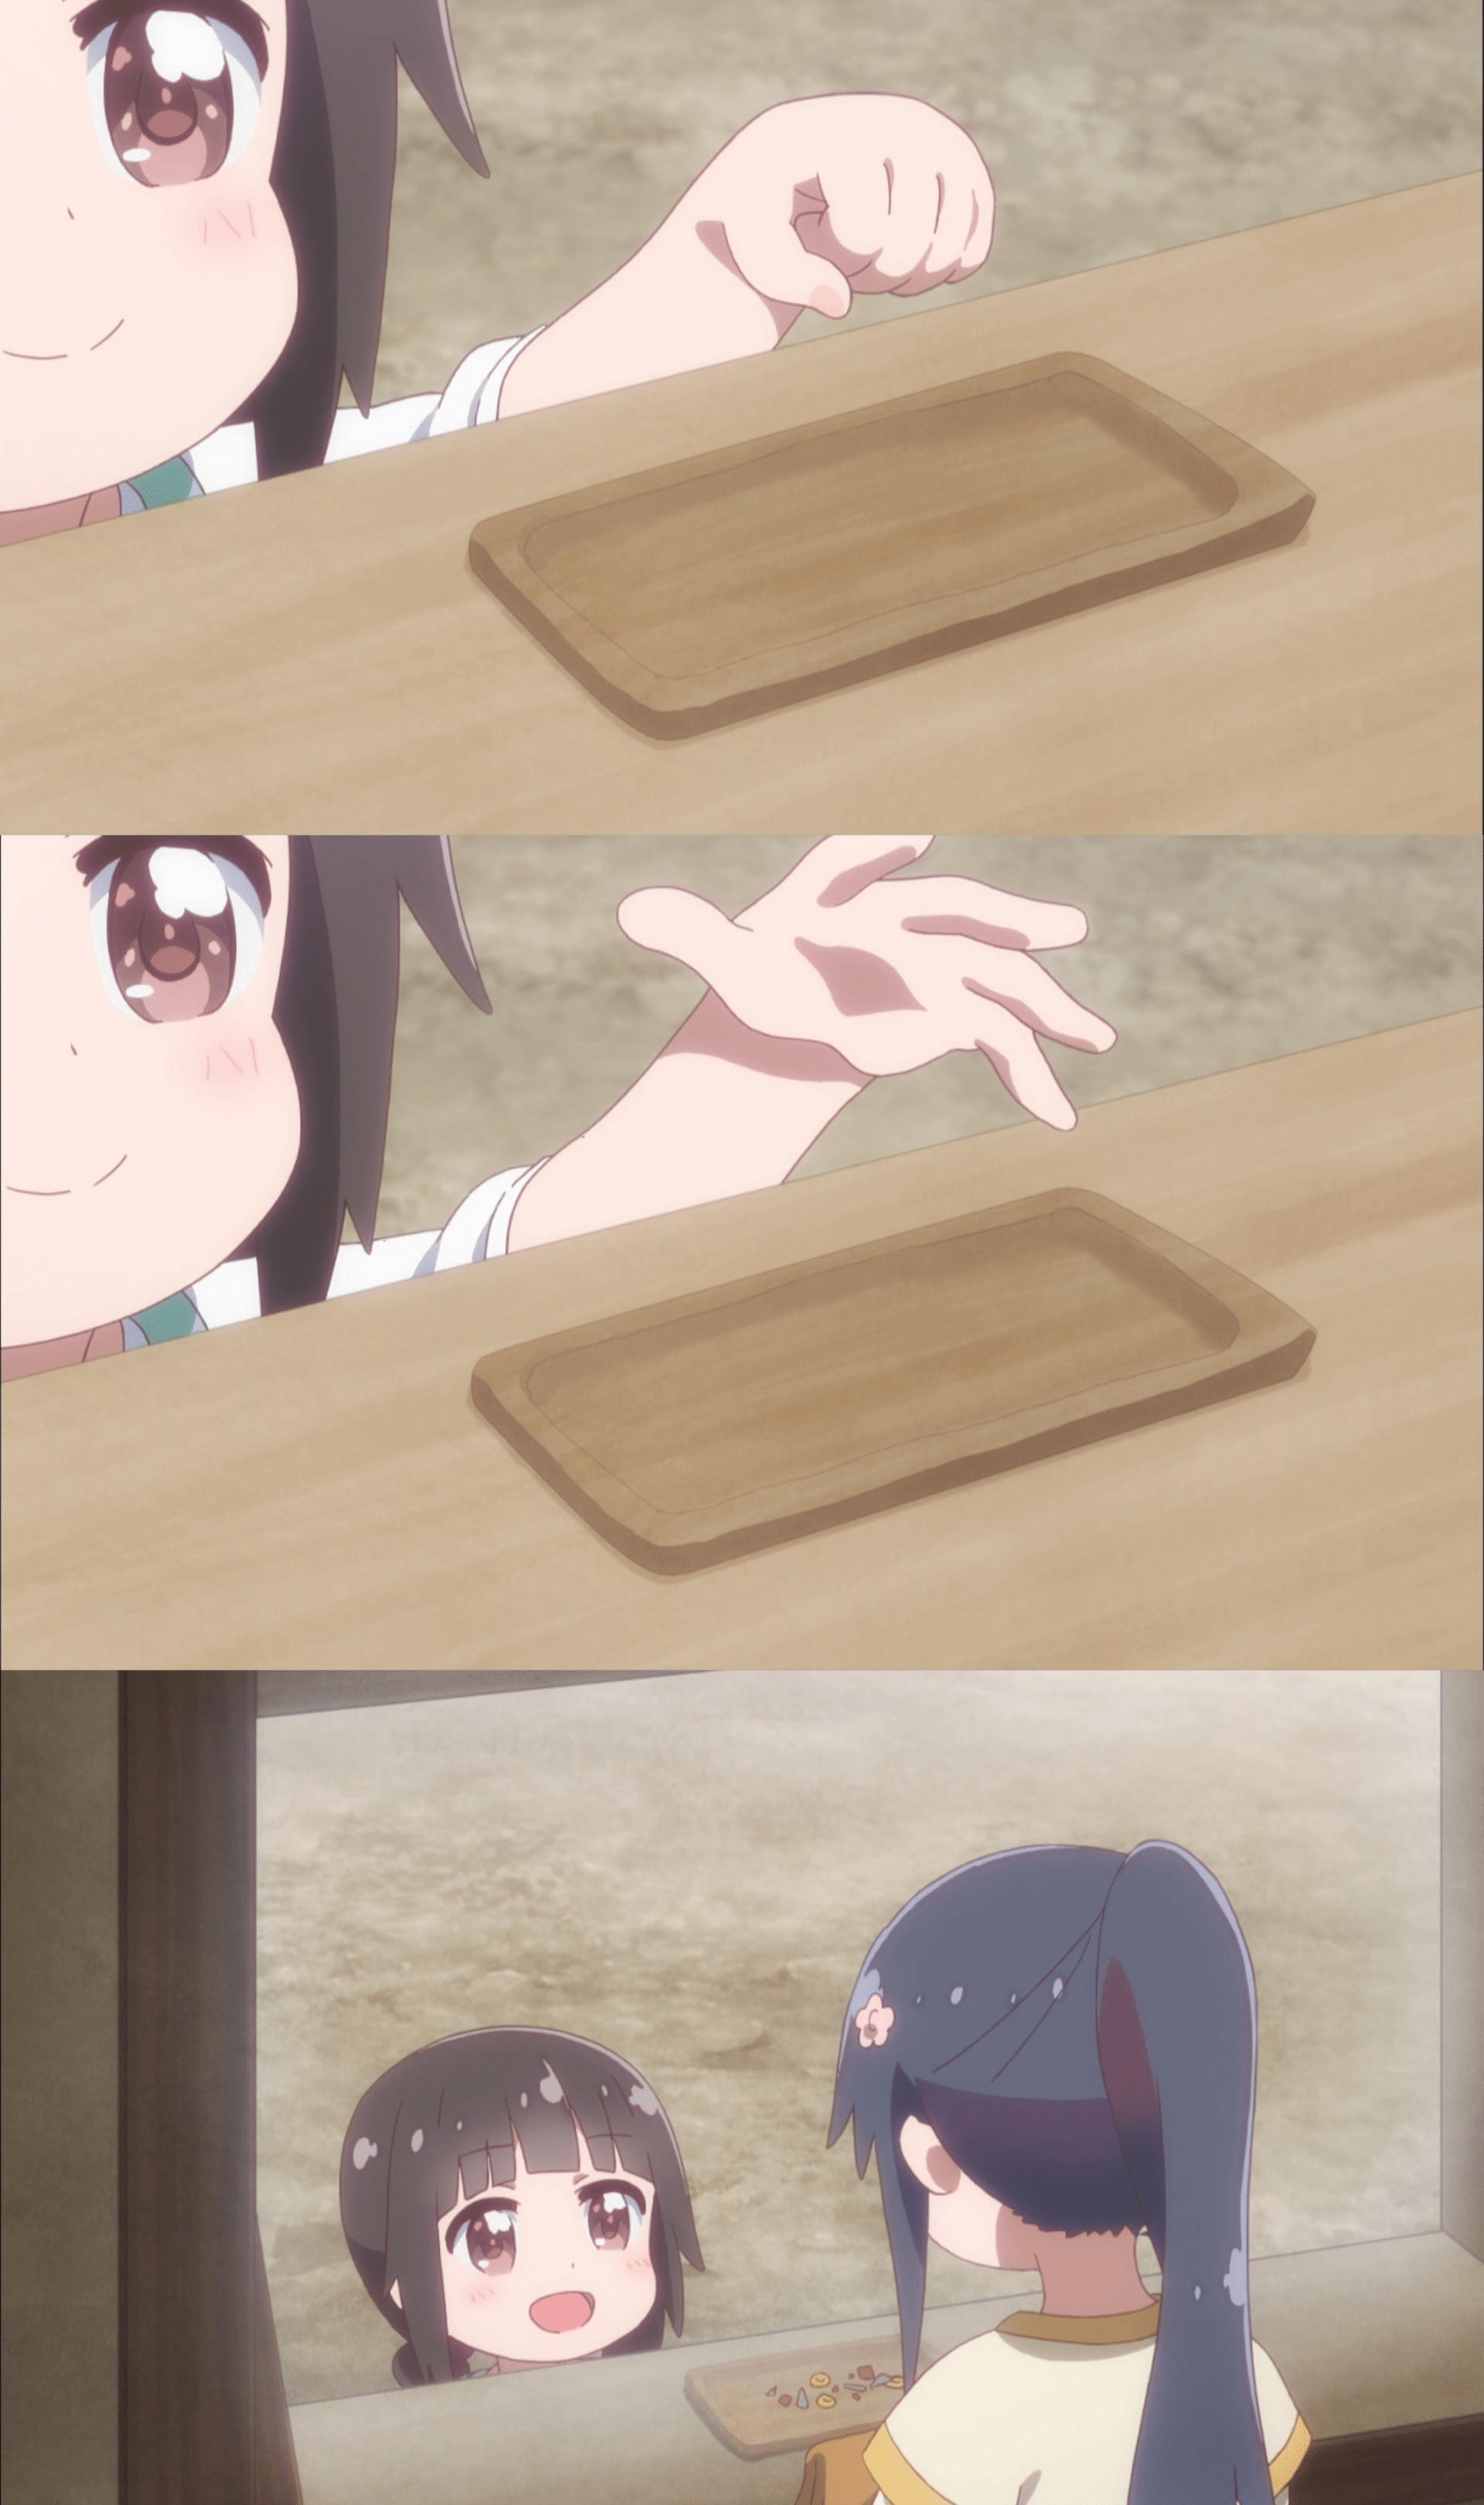 Anime Girl Dropping Something on Tray  meme template blank anime